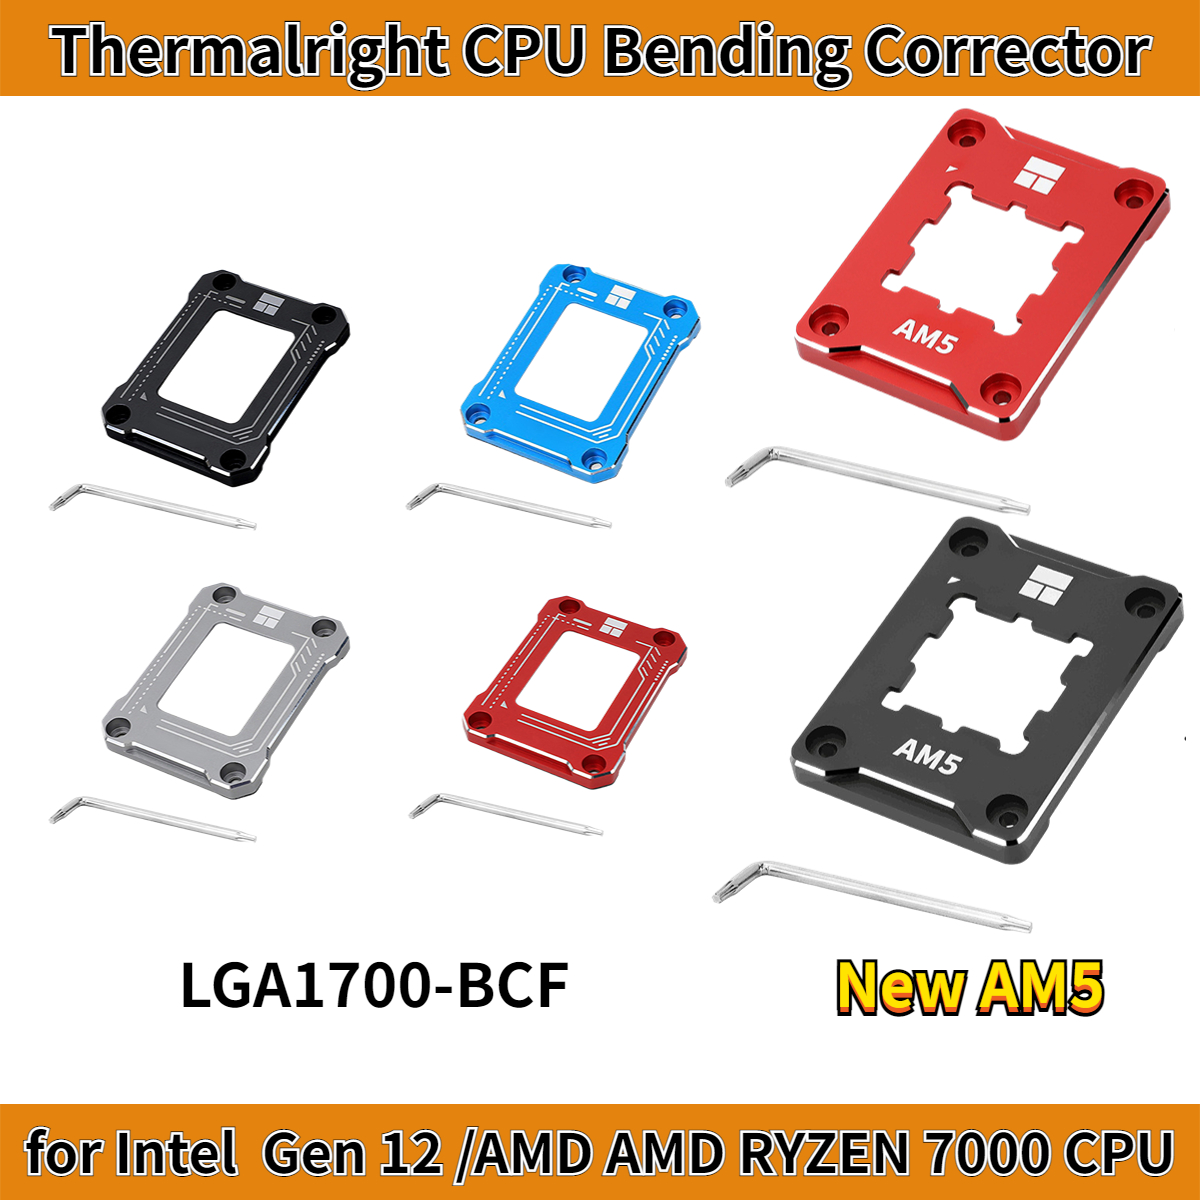 I-Thermalright-LGA1700-BCF-AMD-ASF-CPU-Bending-Correction-Fixed-Buckle-CNC-Aluminium-Alloy-for-Intel-Gen